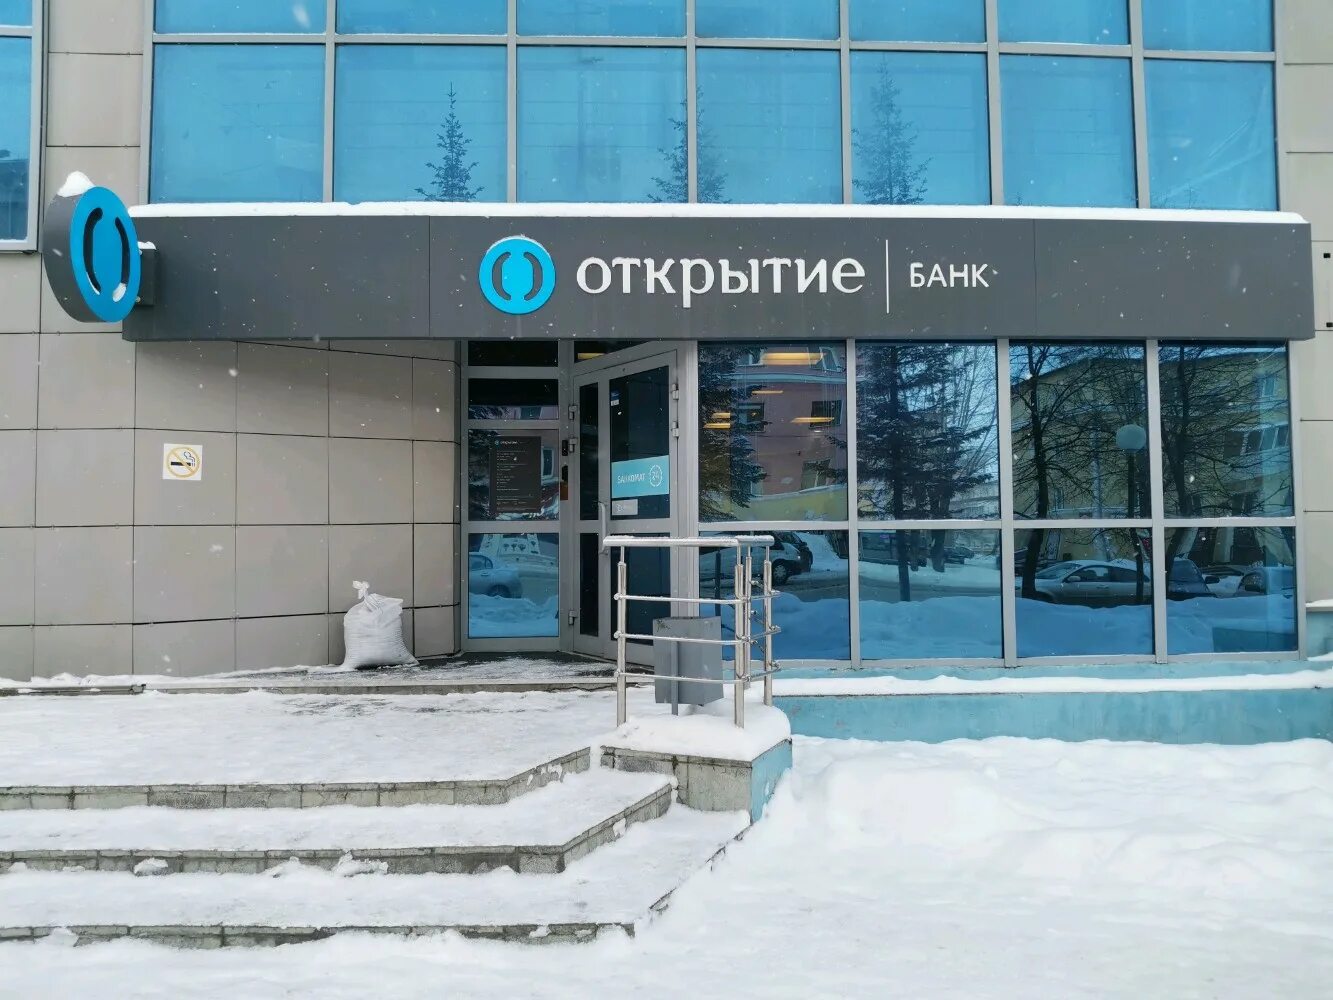 Банк открытие на улице Титова Новосибирск. Титова 29 Новосибирск банк открытие. Банк открытие на Титова 1 Новосибирск. Титова 1 открытие банк.